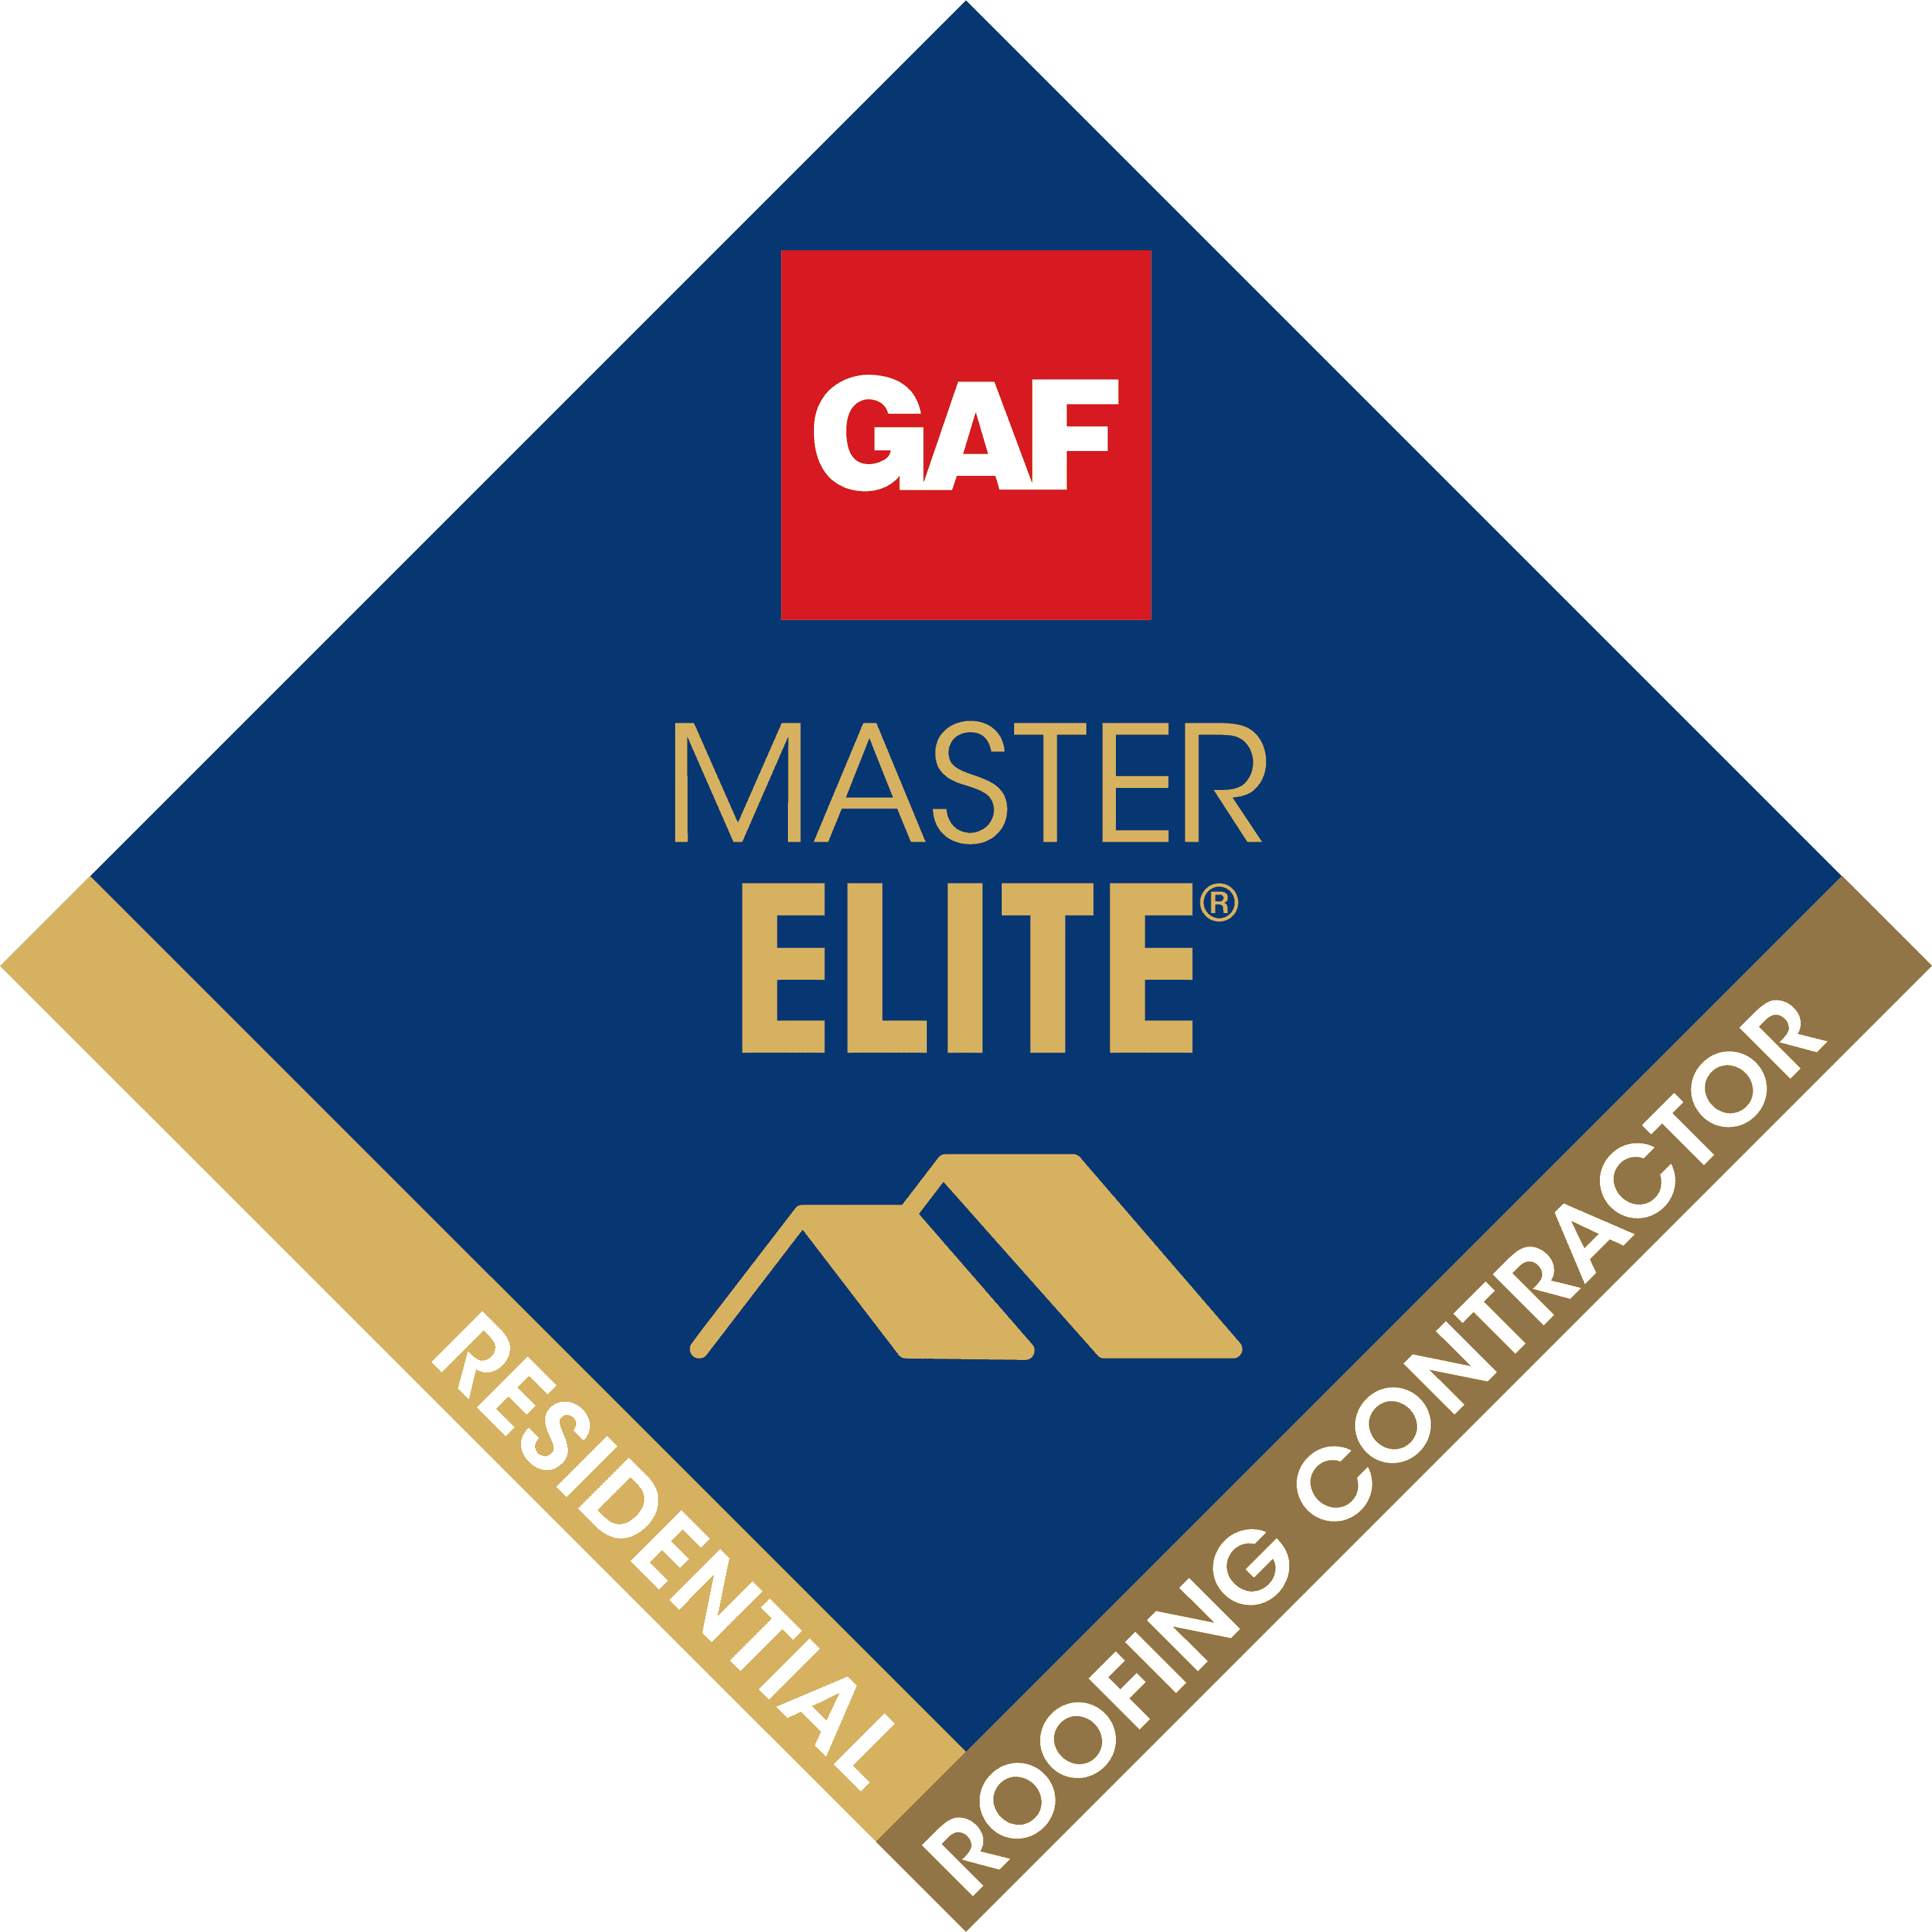 GAF Master Elite Contractors badge